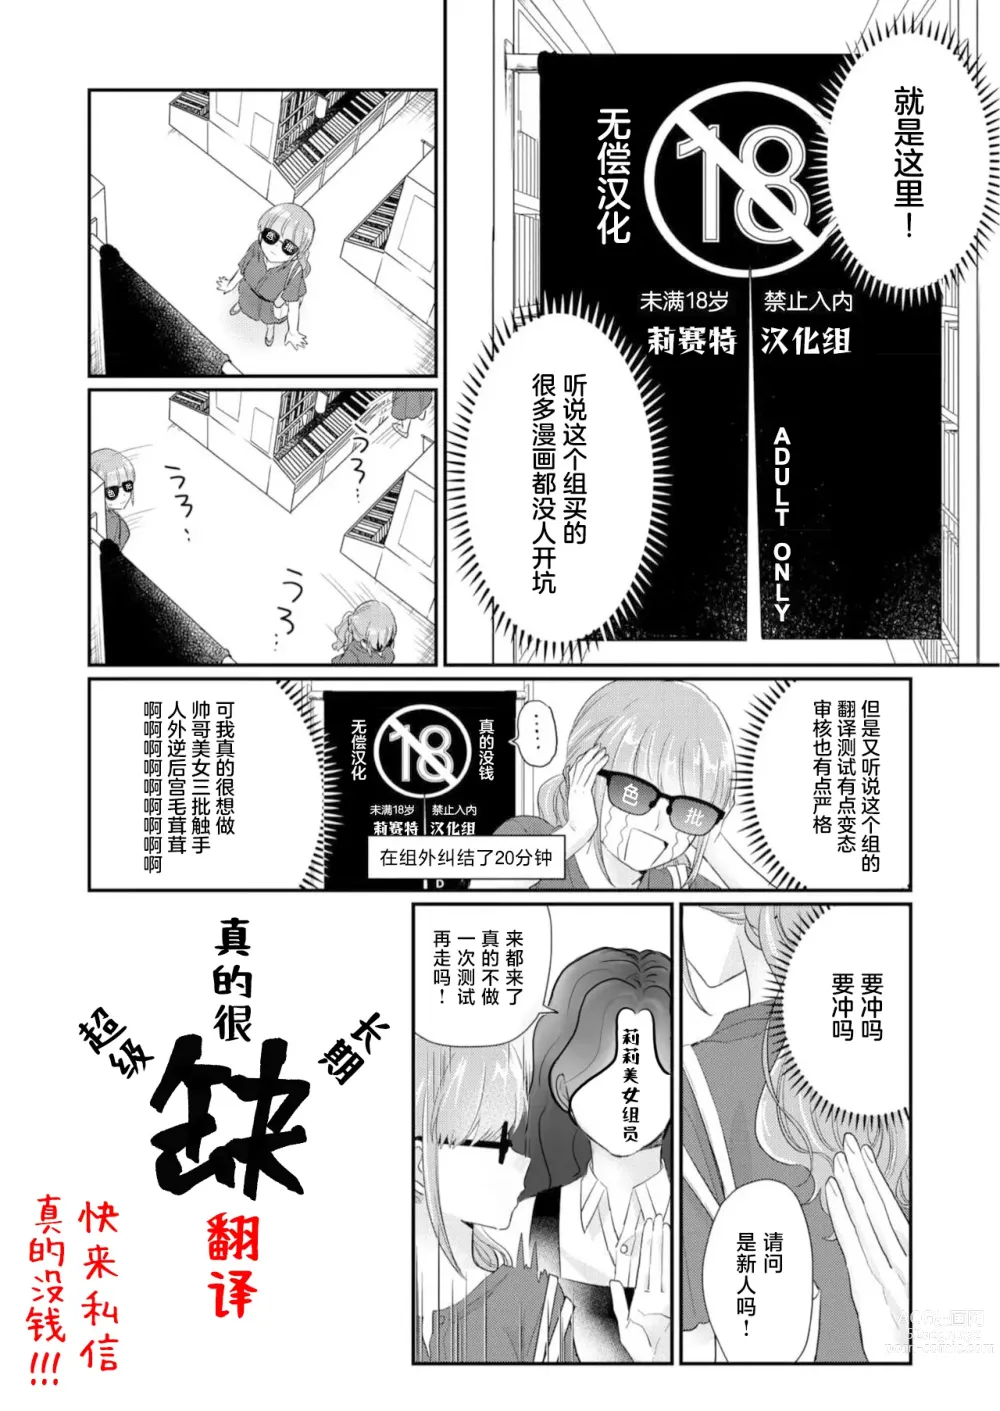 Page 181 of manga 来到异世界的我职业竟是『野人』 1-6